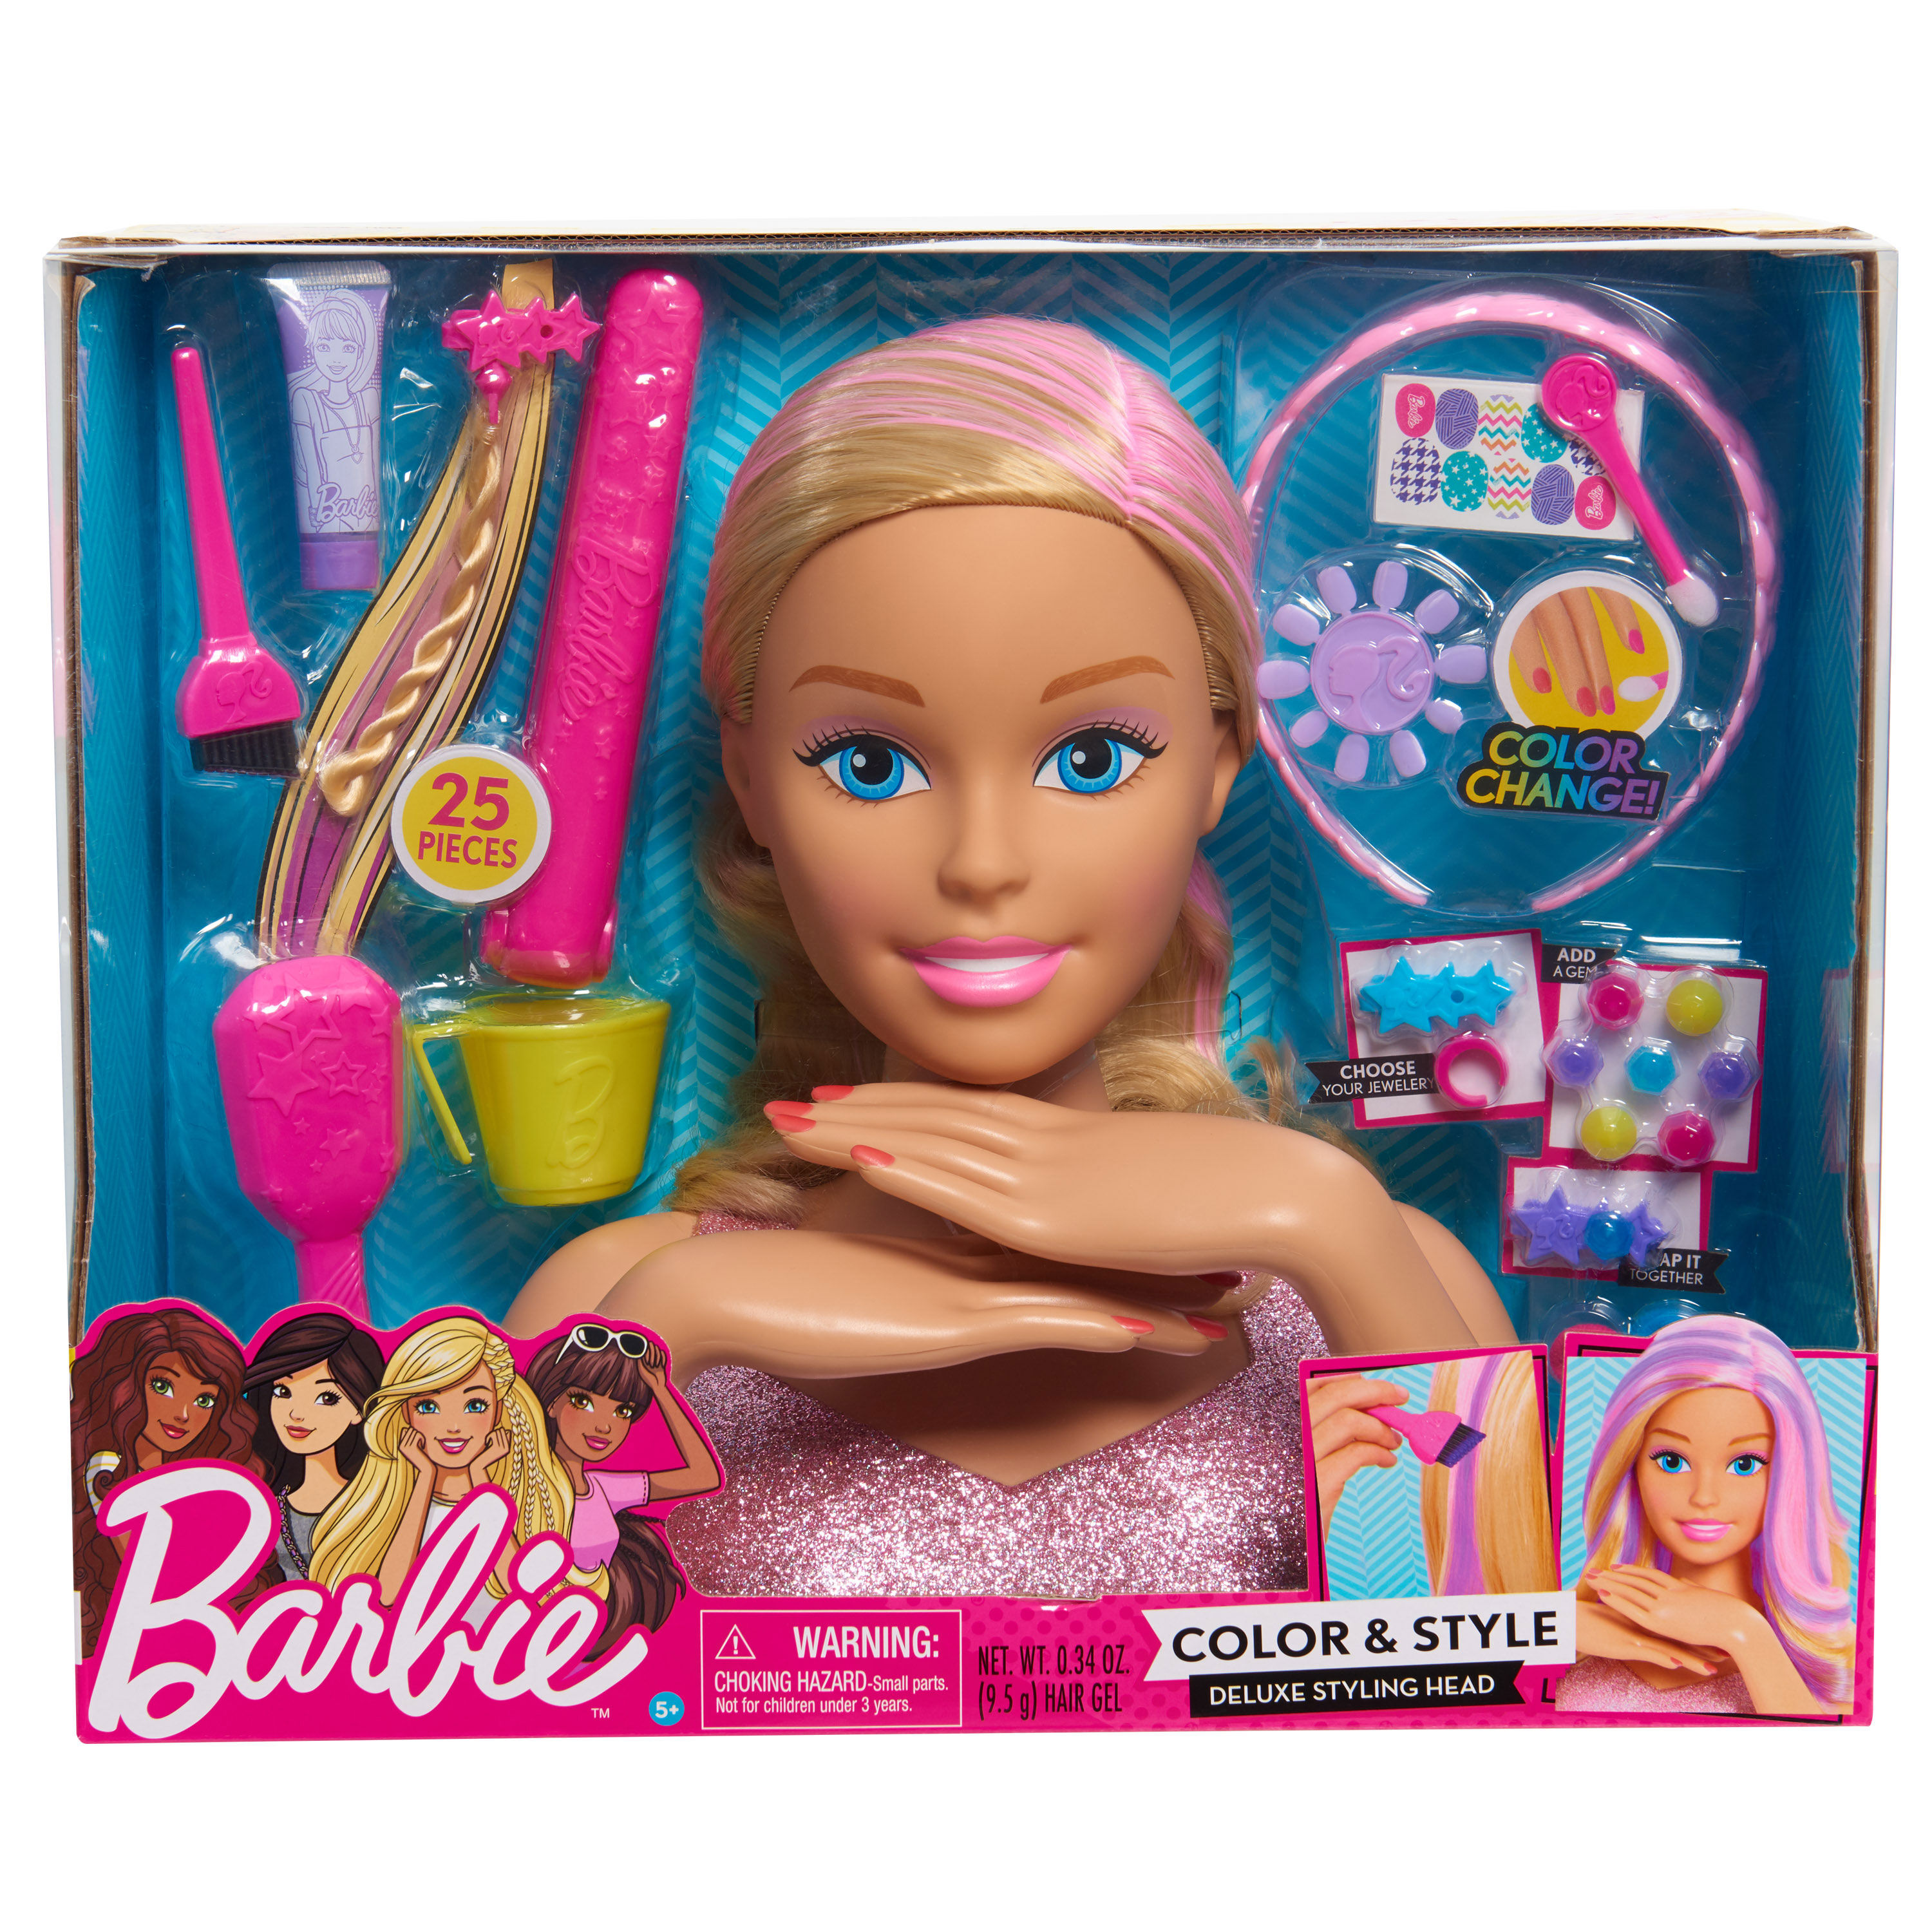 a barbie head